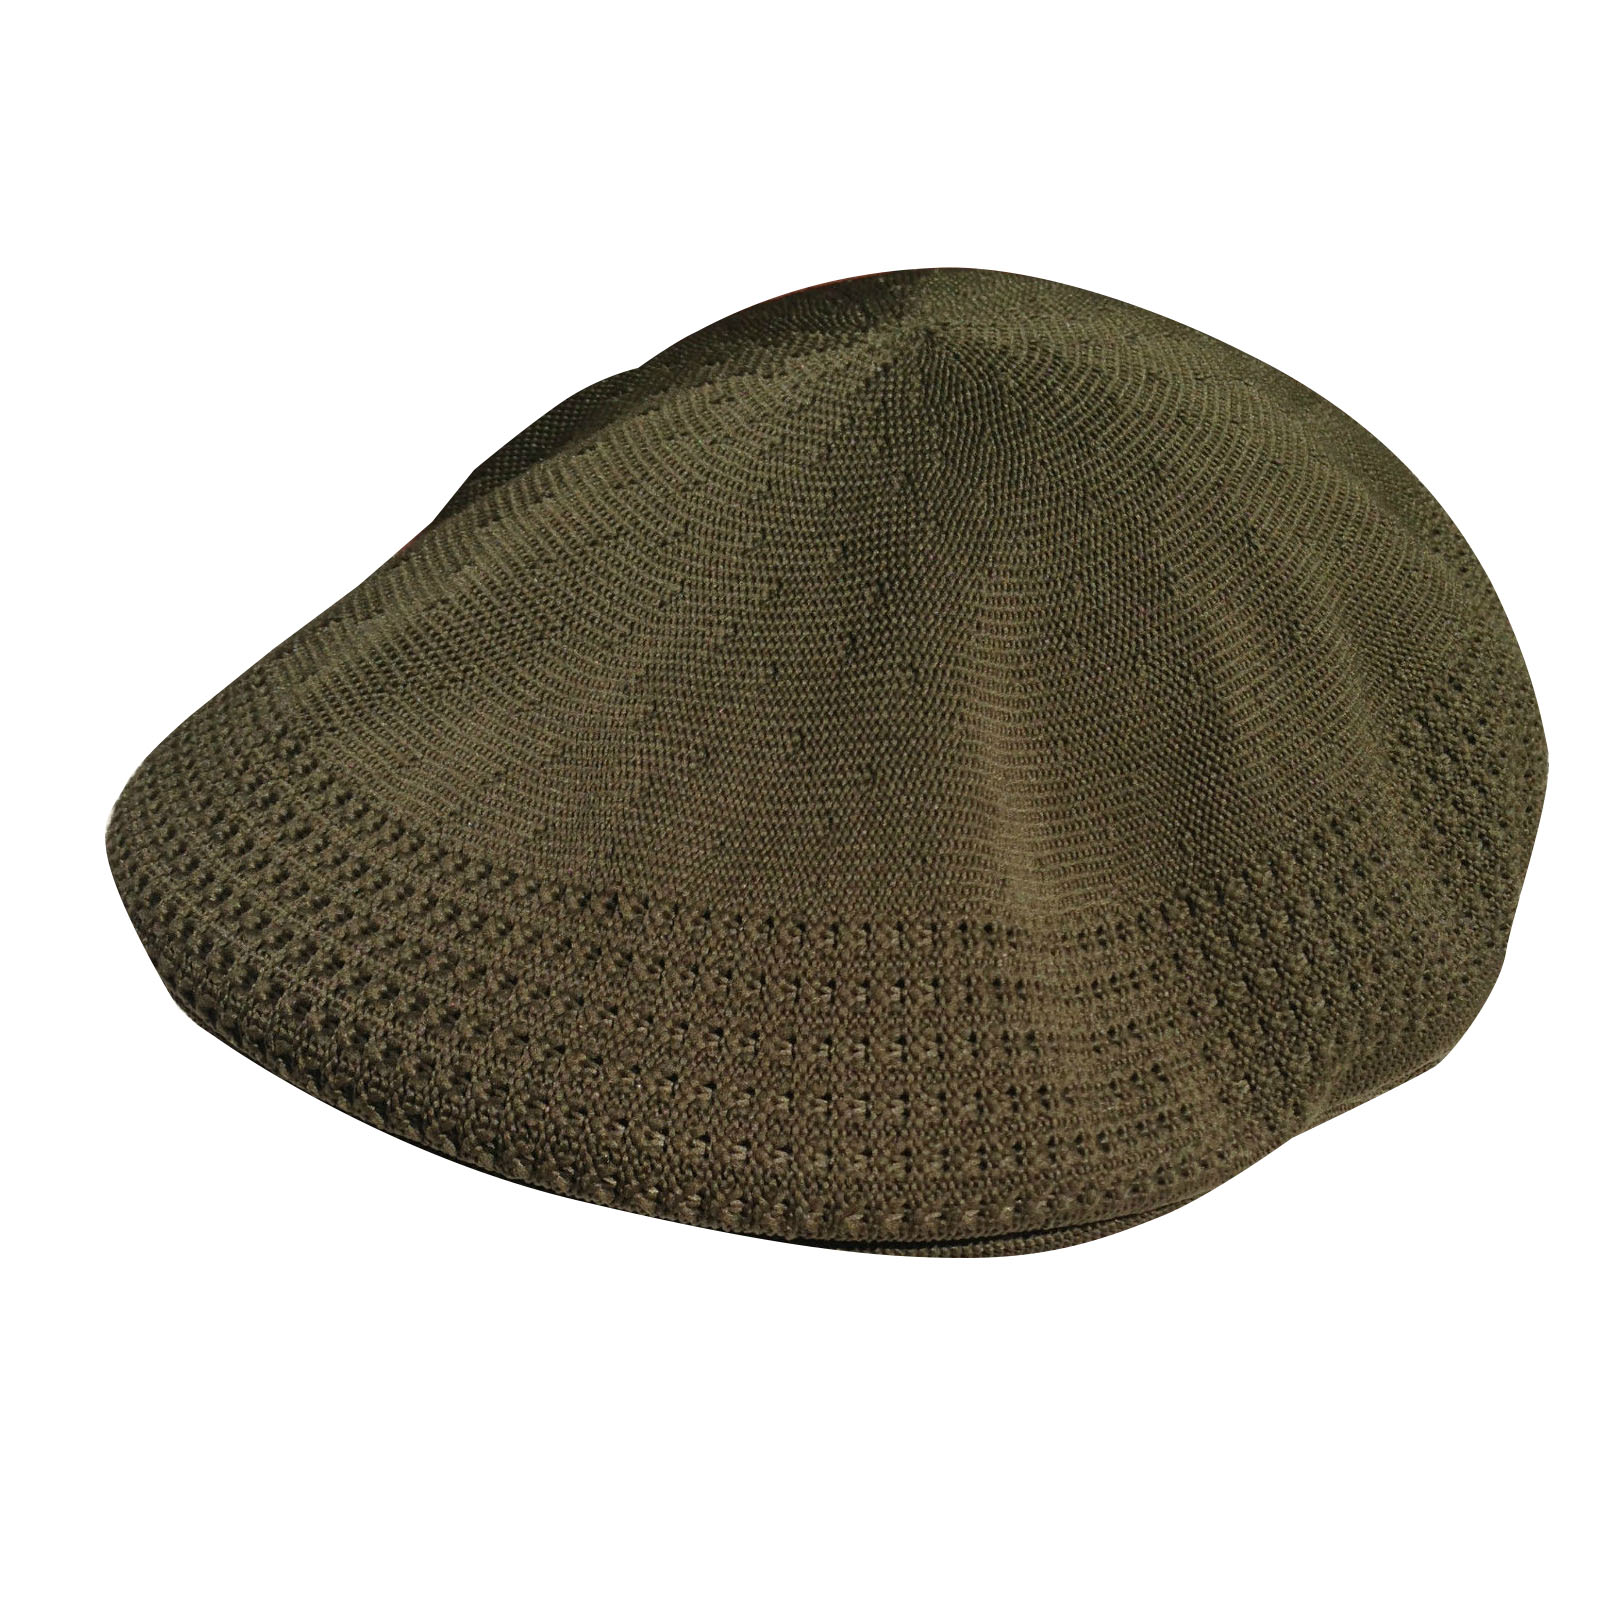 KANGOL Tropic Ventair 504 Ivy Cap 0290BC Classic Summer Vintage Flat Driving Hat